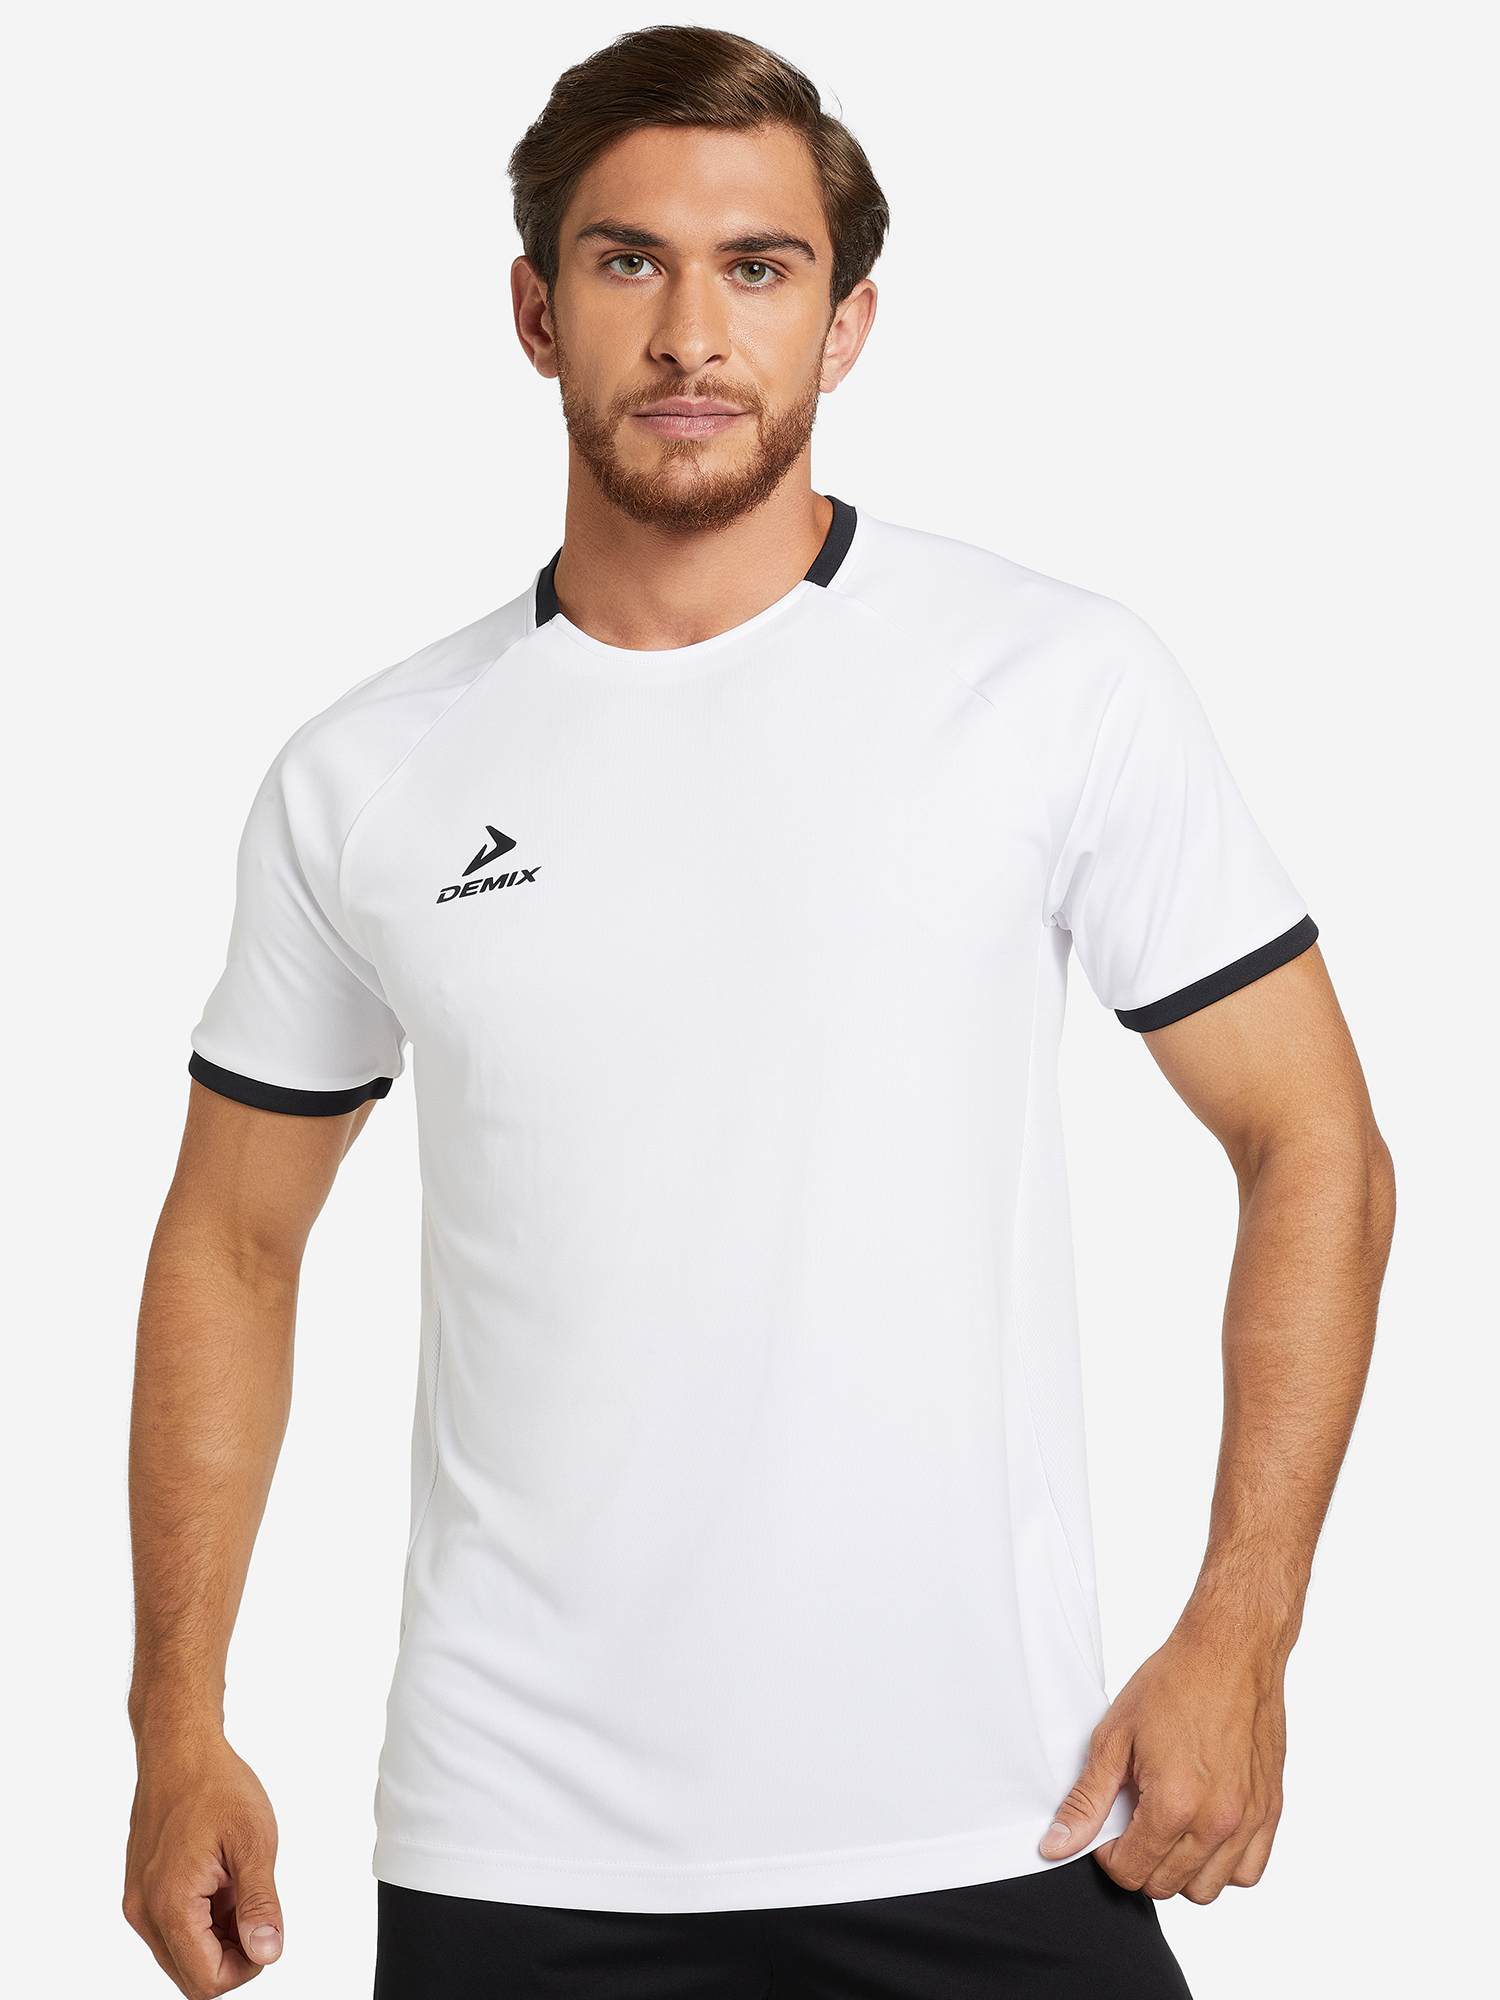 Футболка мужская Demix Division, Белый футболка мужская demix legacy белый